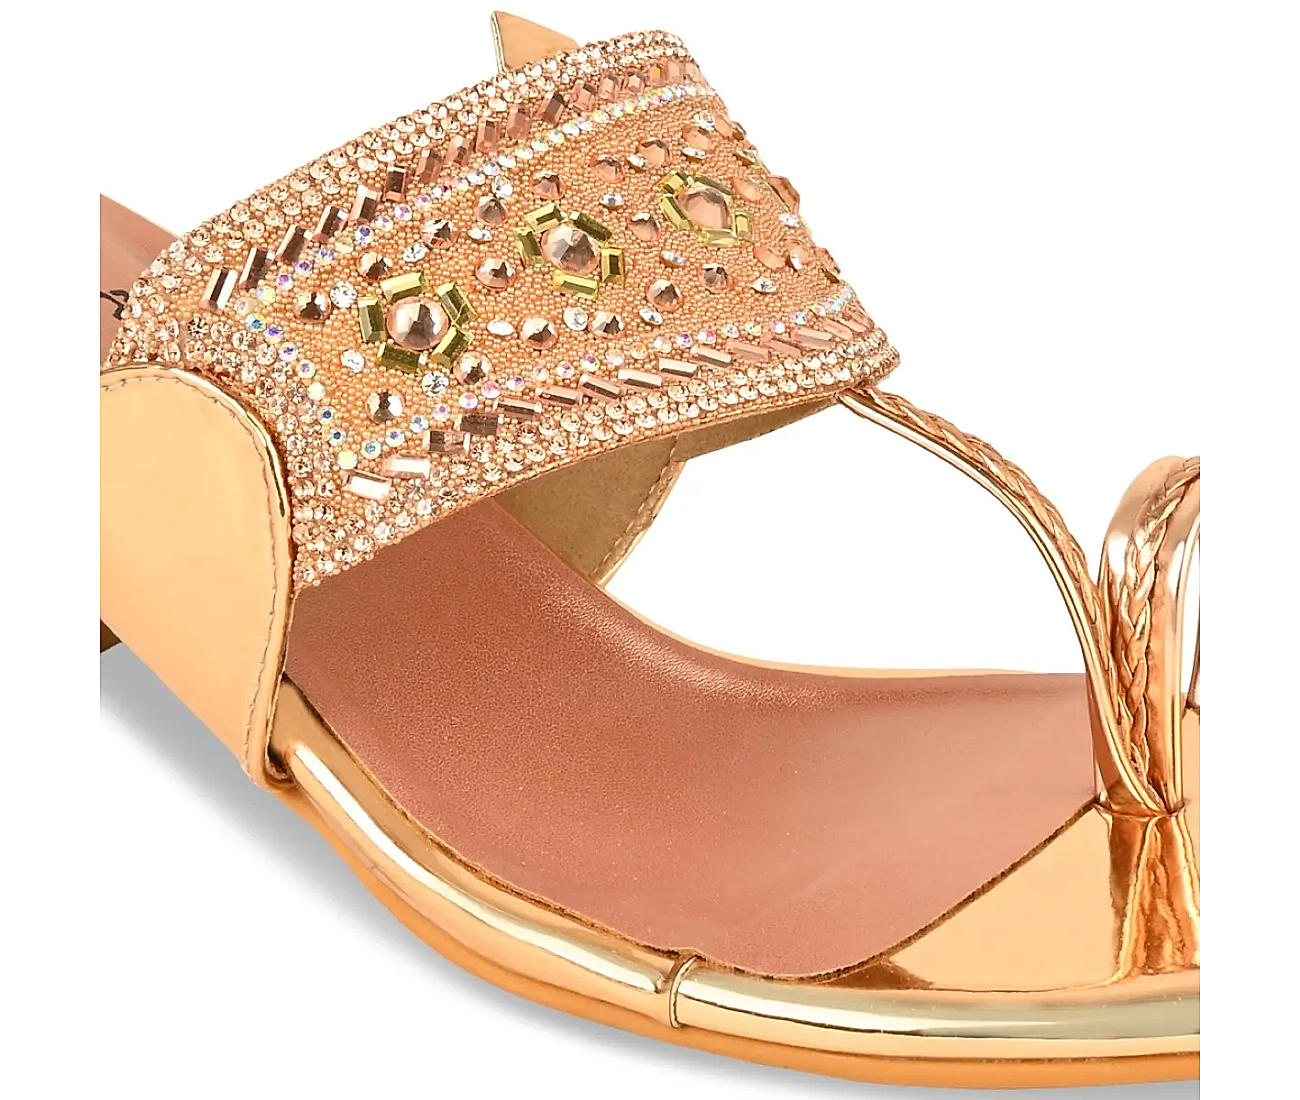 Bling Thing Rhinestone Platform Heels | Wedding shoes heels, Heels, Shoes  heels classy